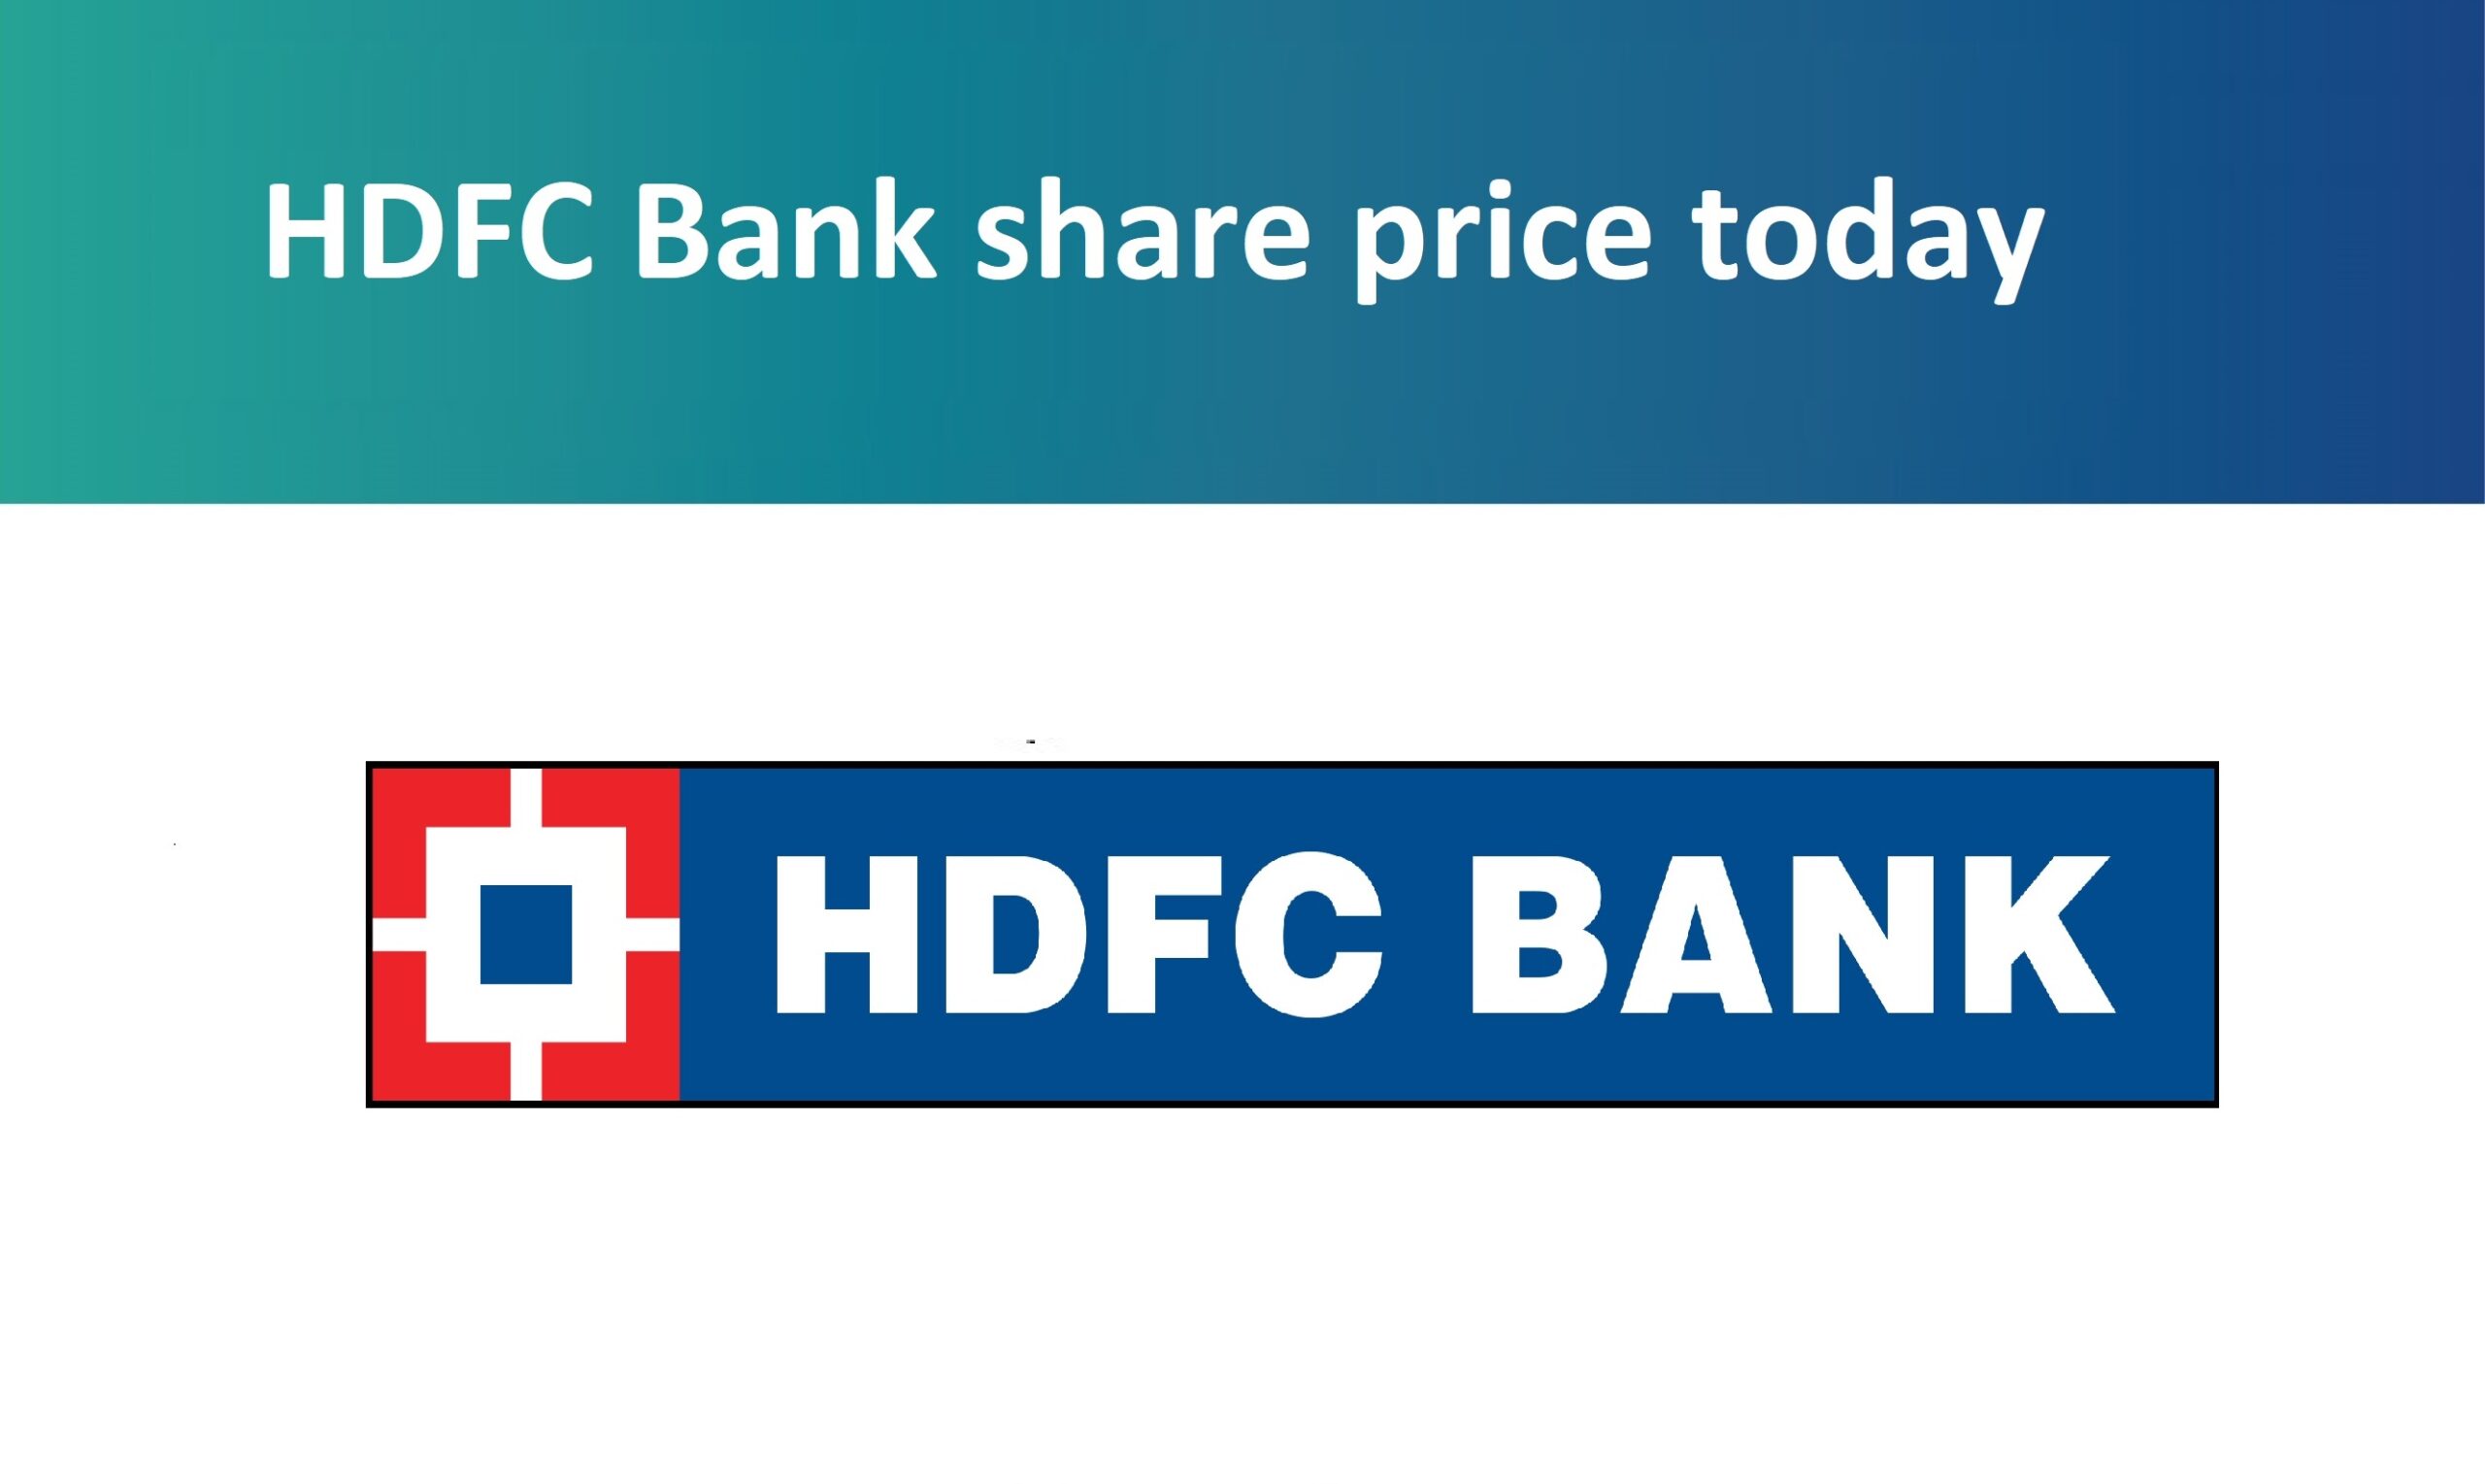 HDFC Bank shares